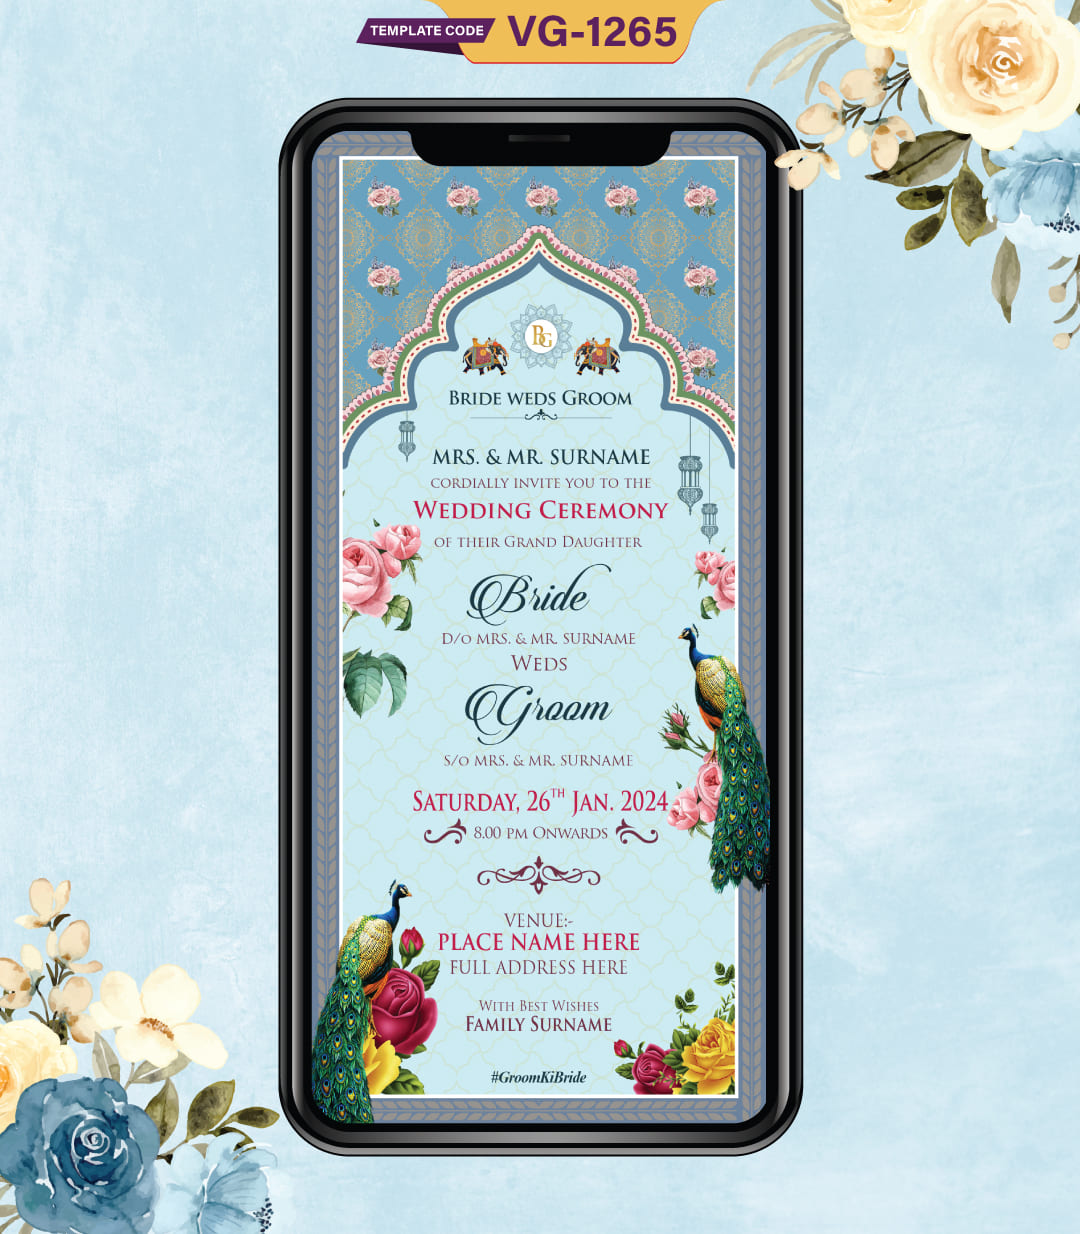 Peacock Theme Wedding Invitation Card